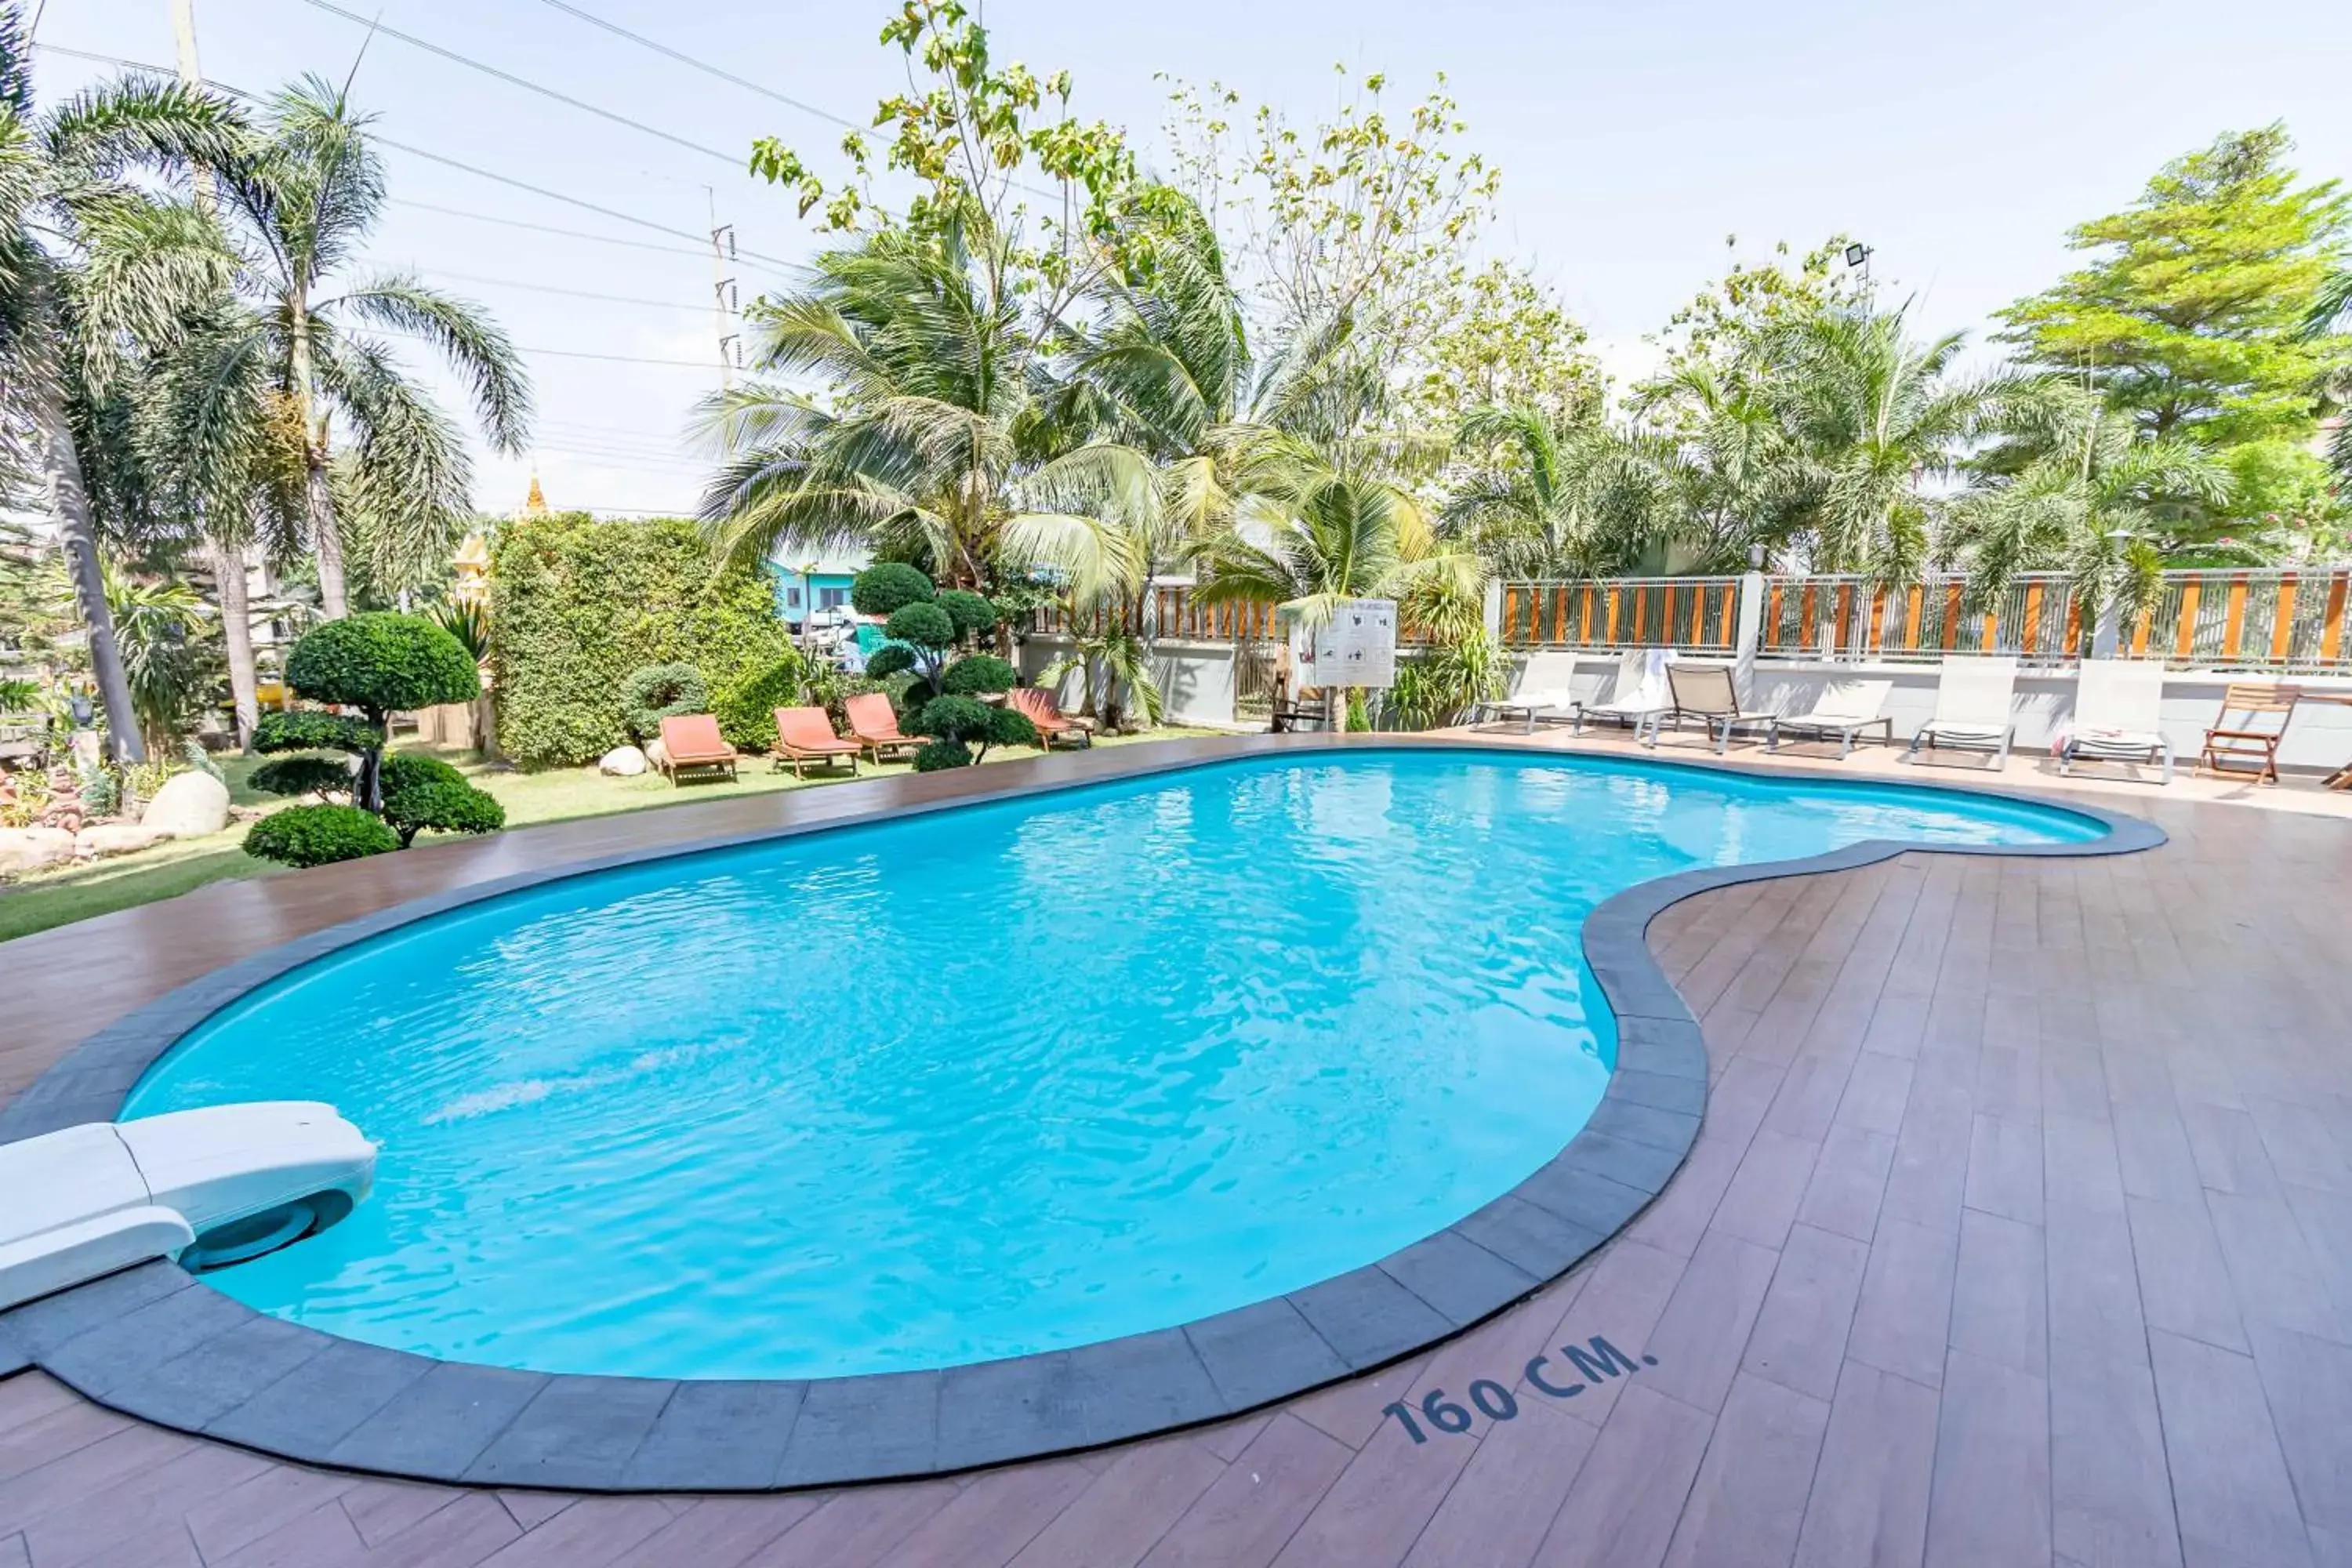 Swimming Pool in Silver Gold Garden, Suvarnabhumi Airport